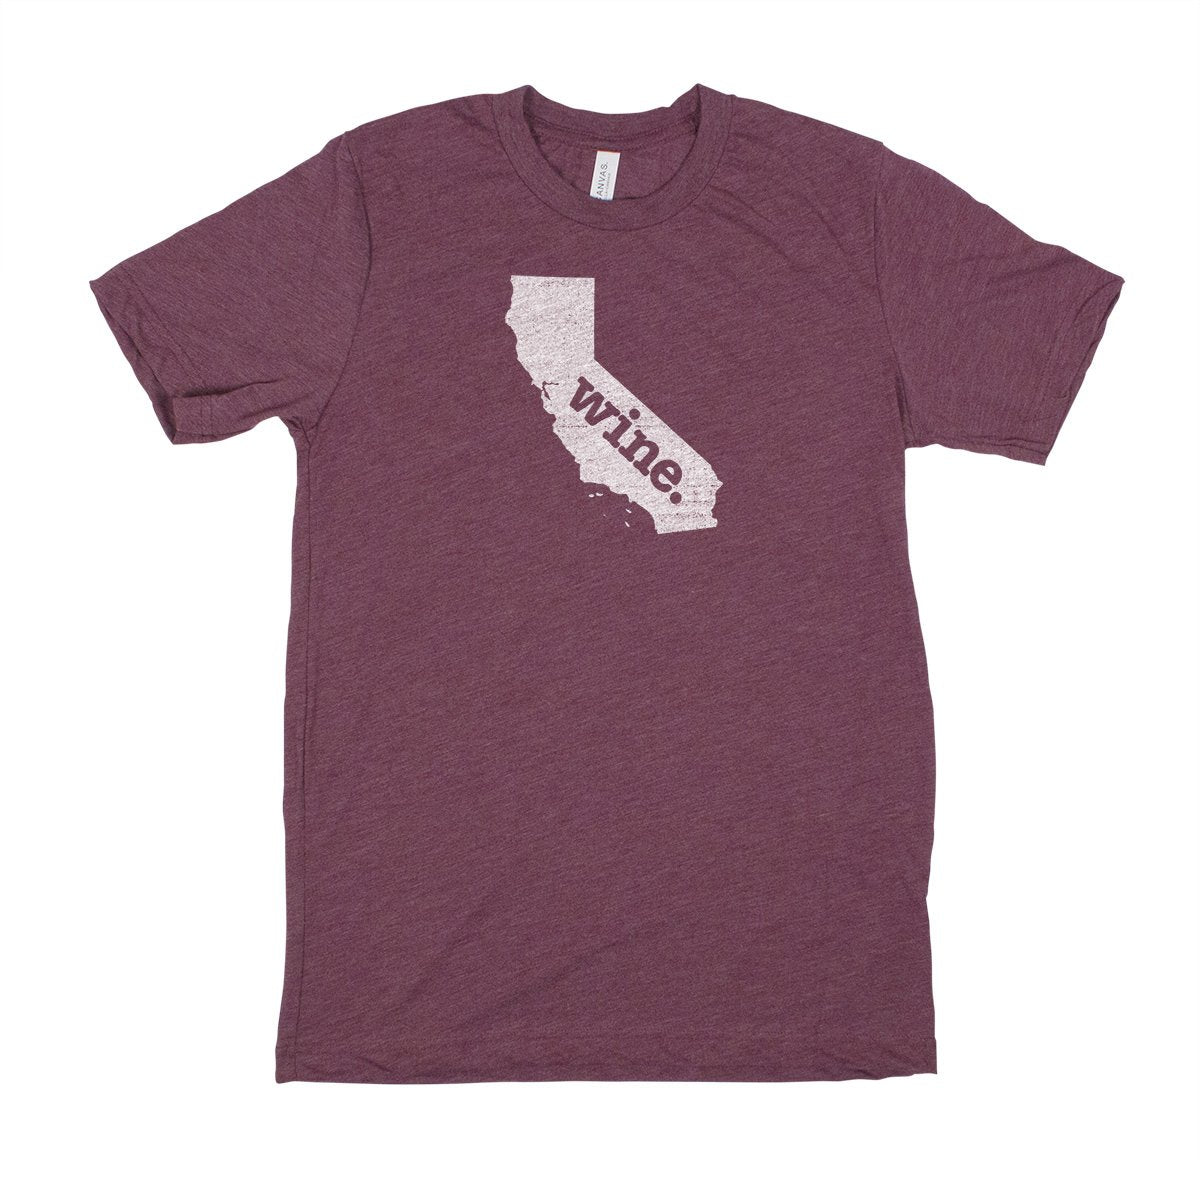 run. Men's Unisex T-Shirt - US